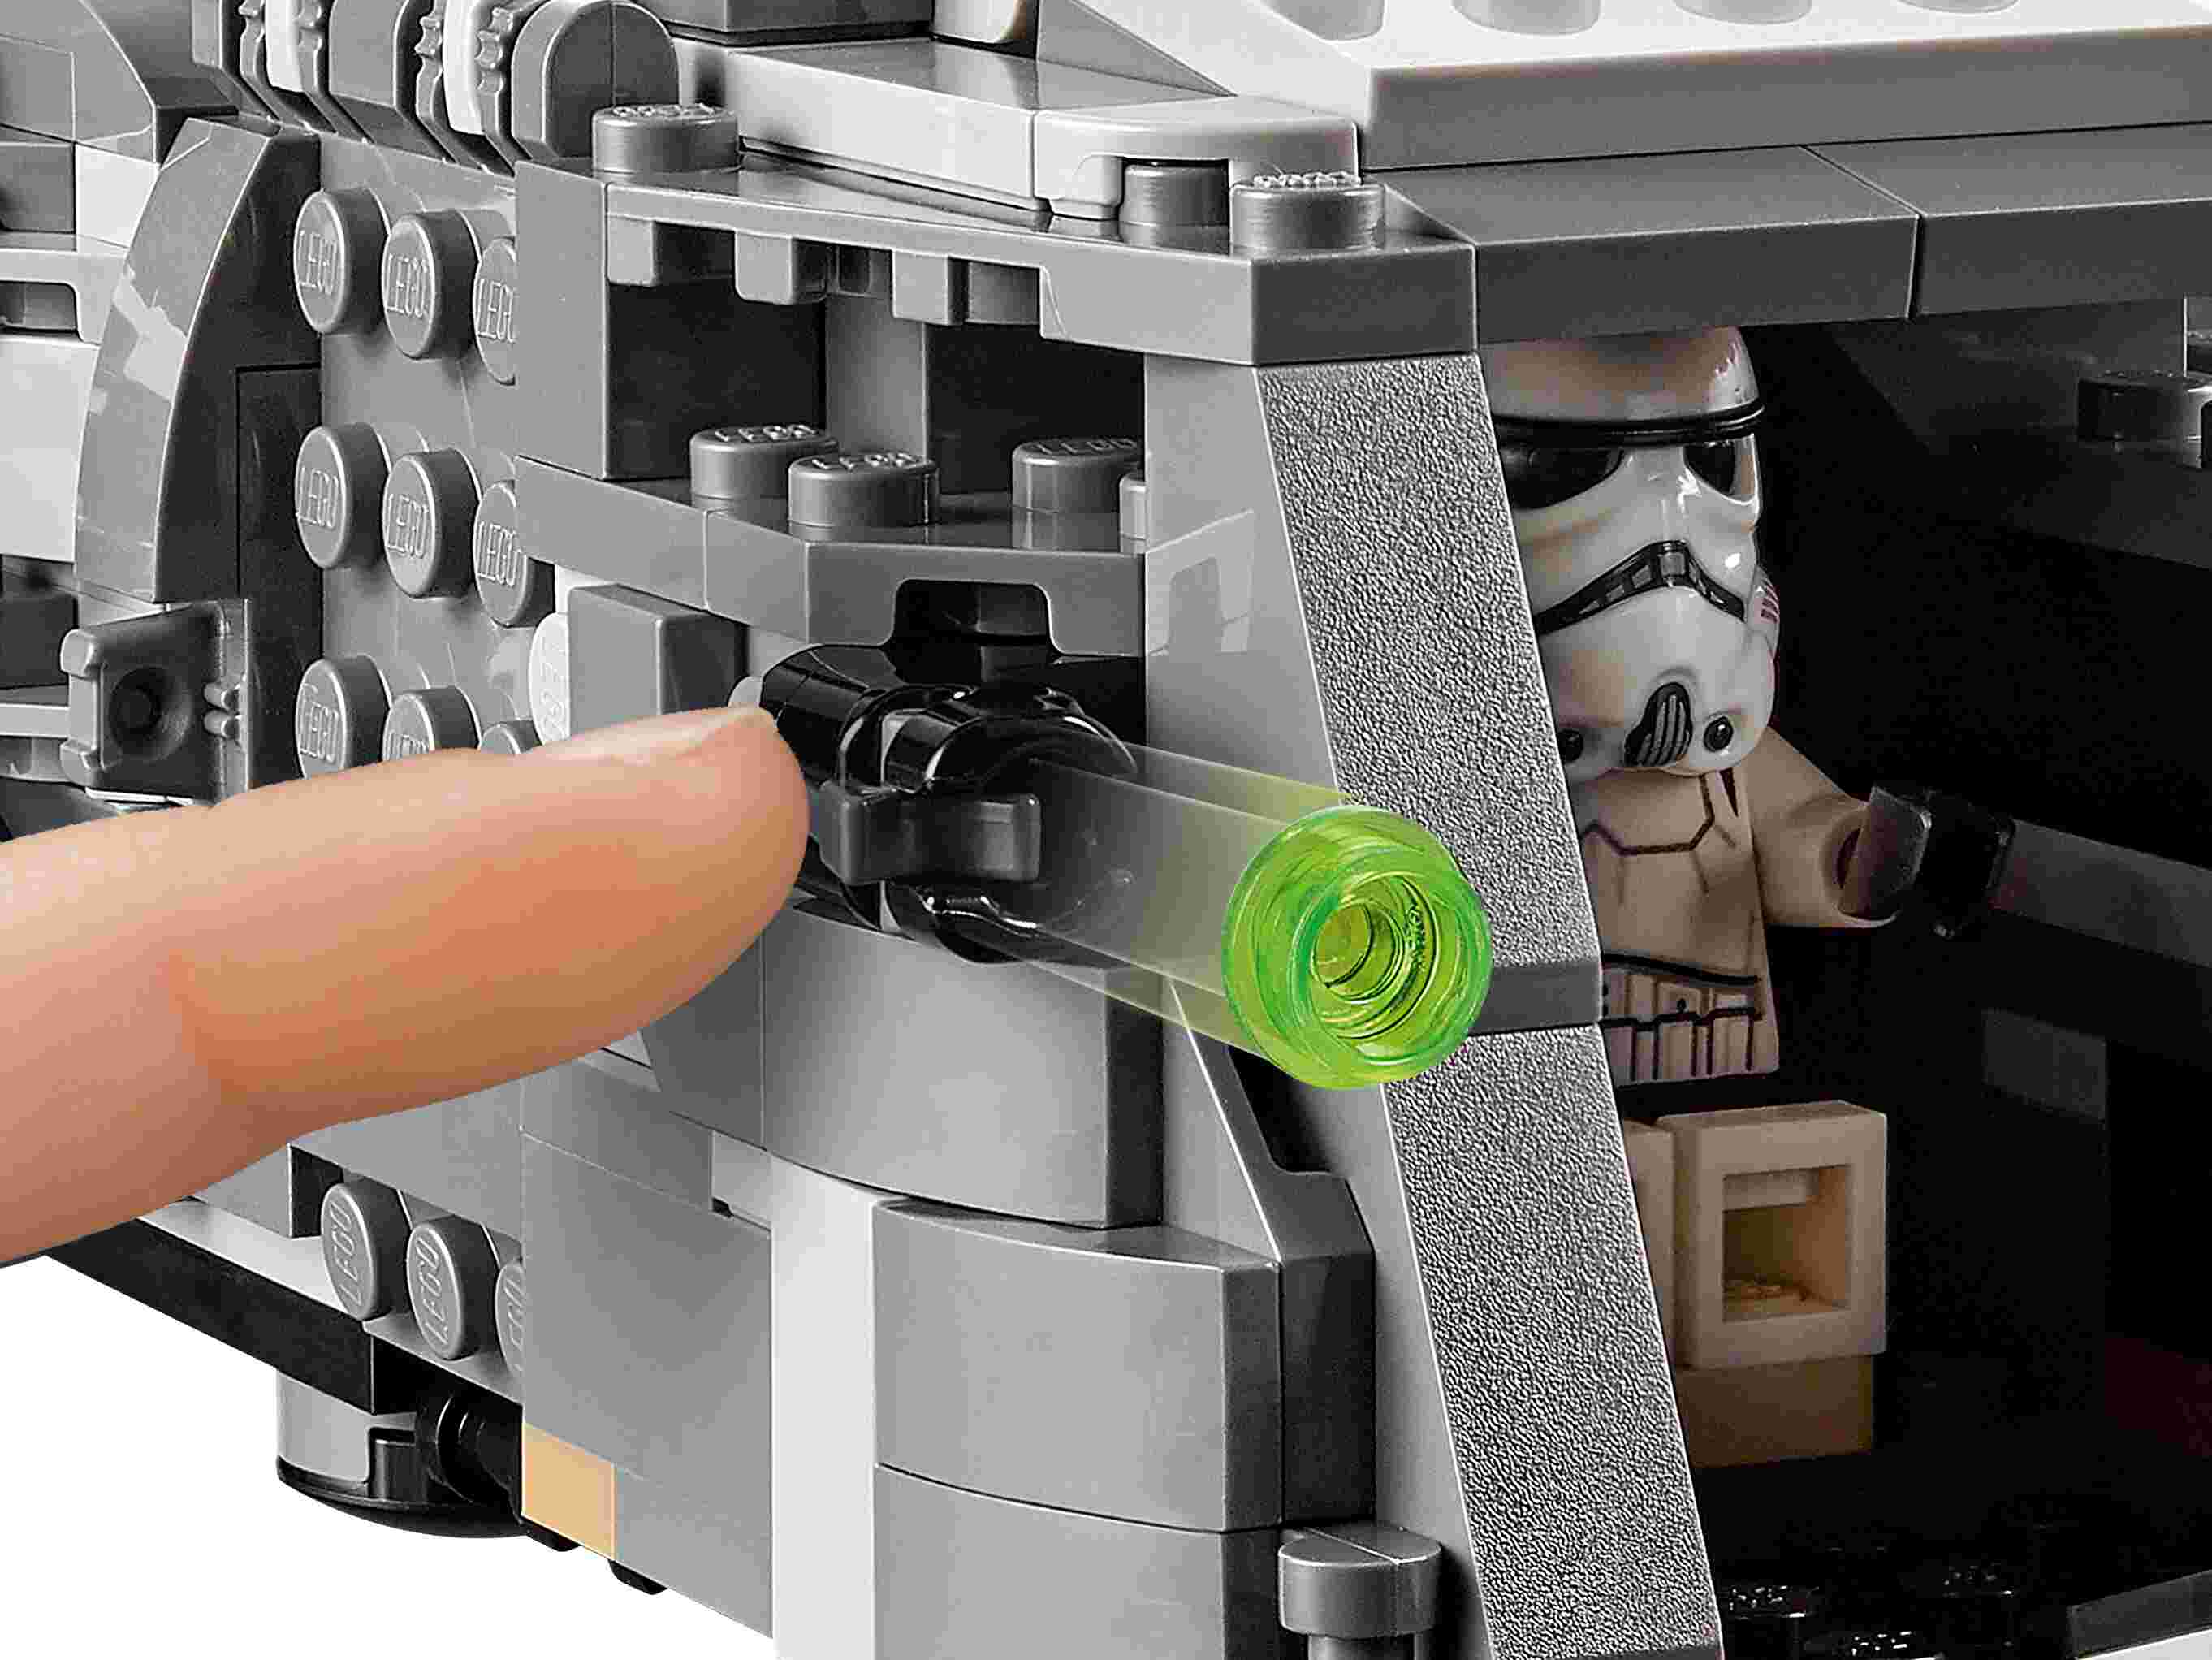 LEGO 75311 Star Wars Imperialer Marauder, Mandalorian-Modell Mit 4 Minifiguren